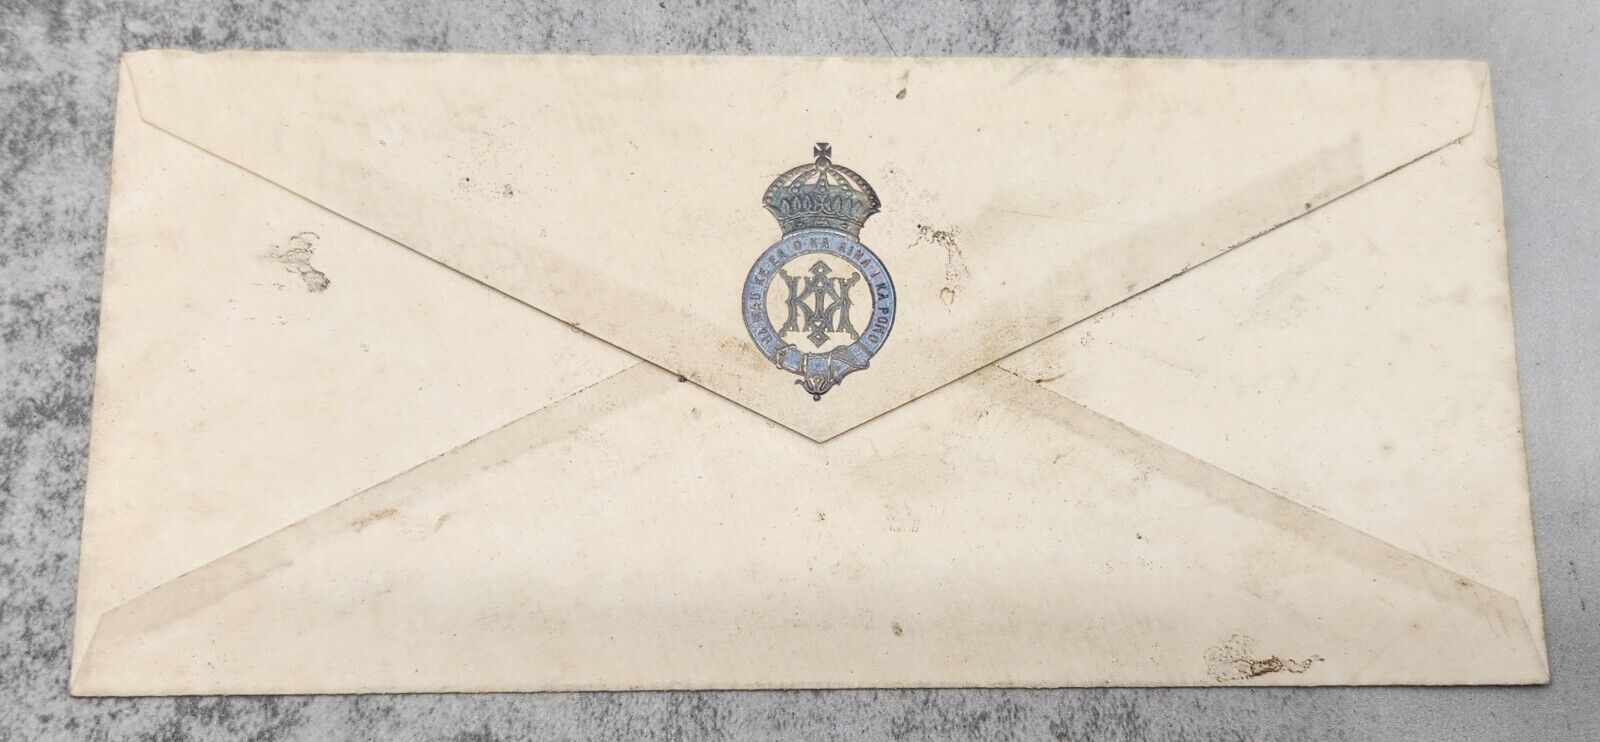 Vintage Early to Late 1800s Hawaiian Kingdom Envelope Embossed Royal Monogram